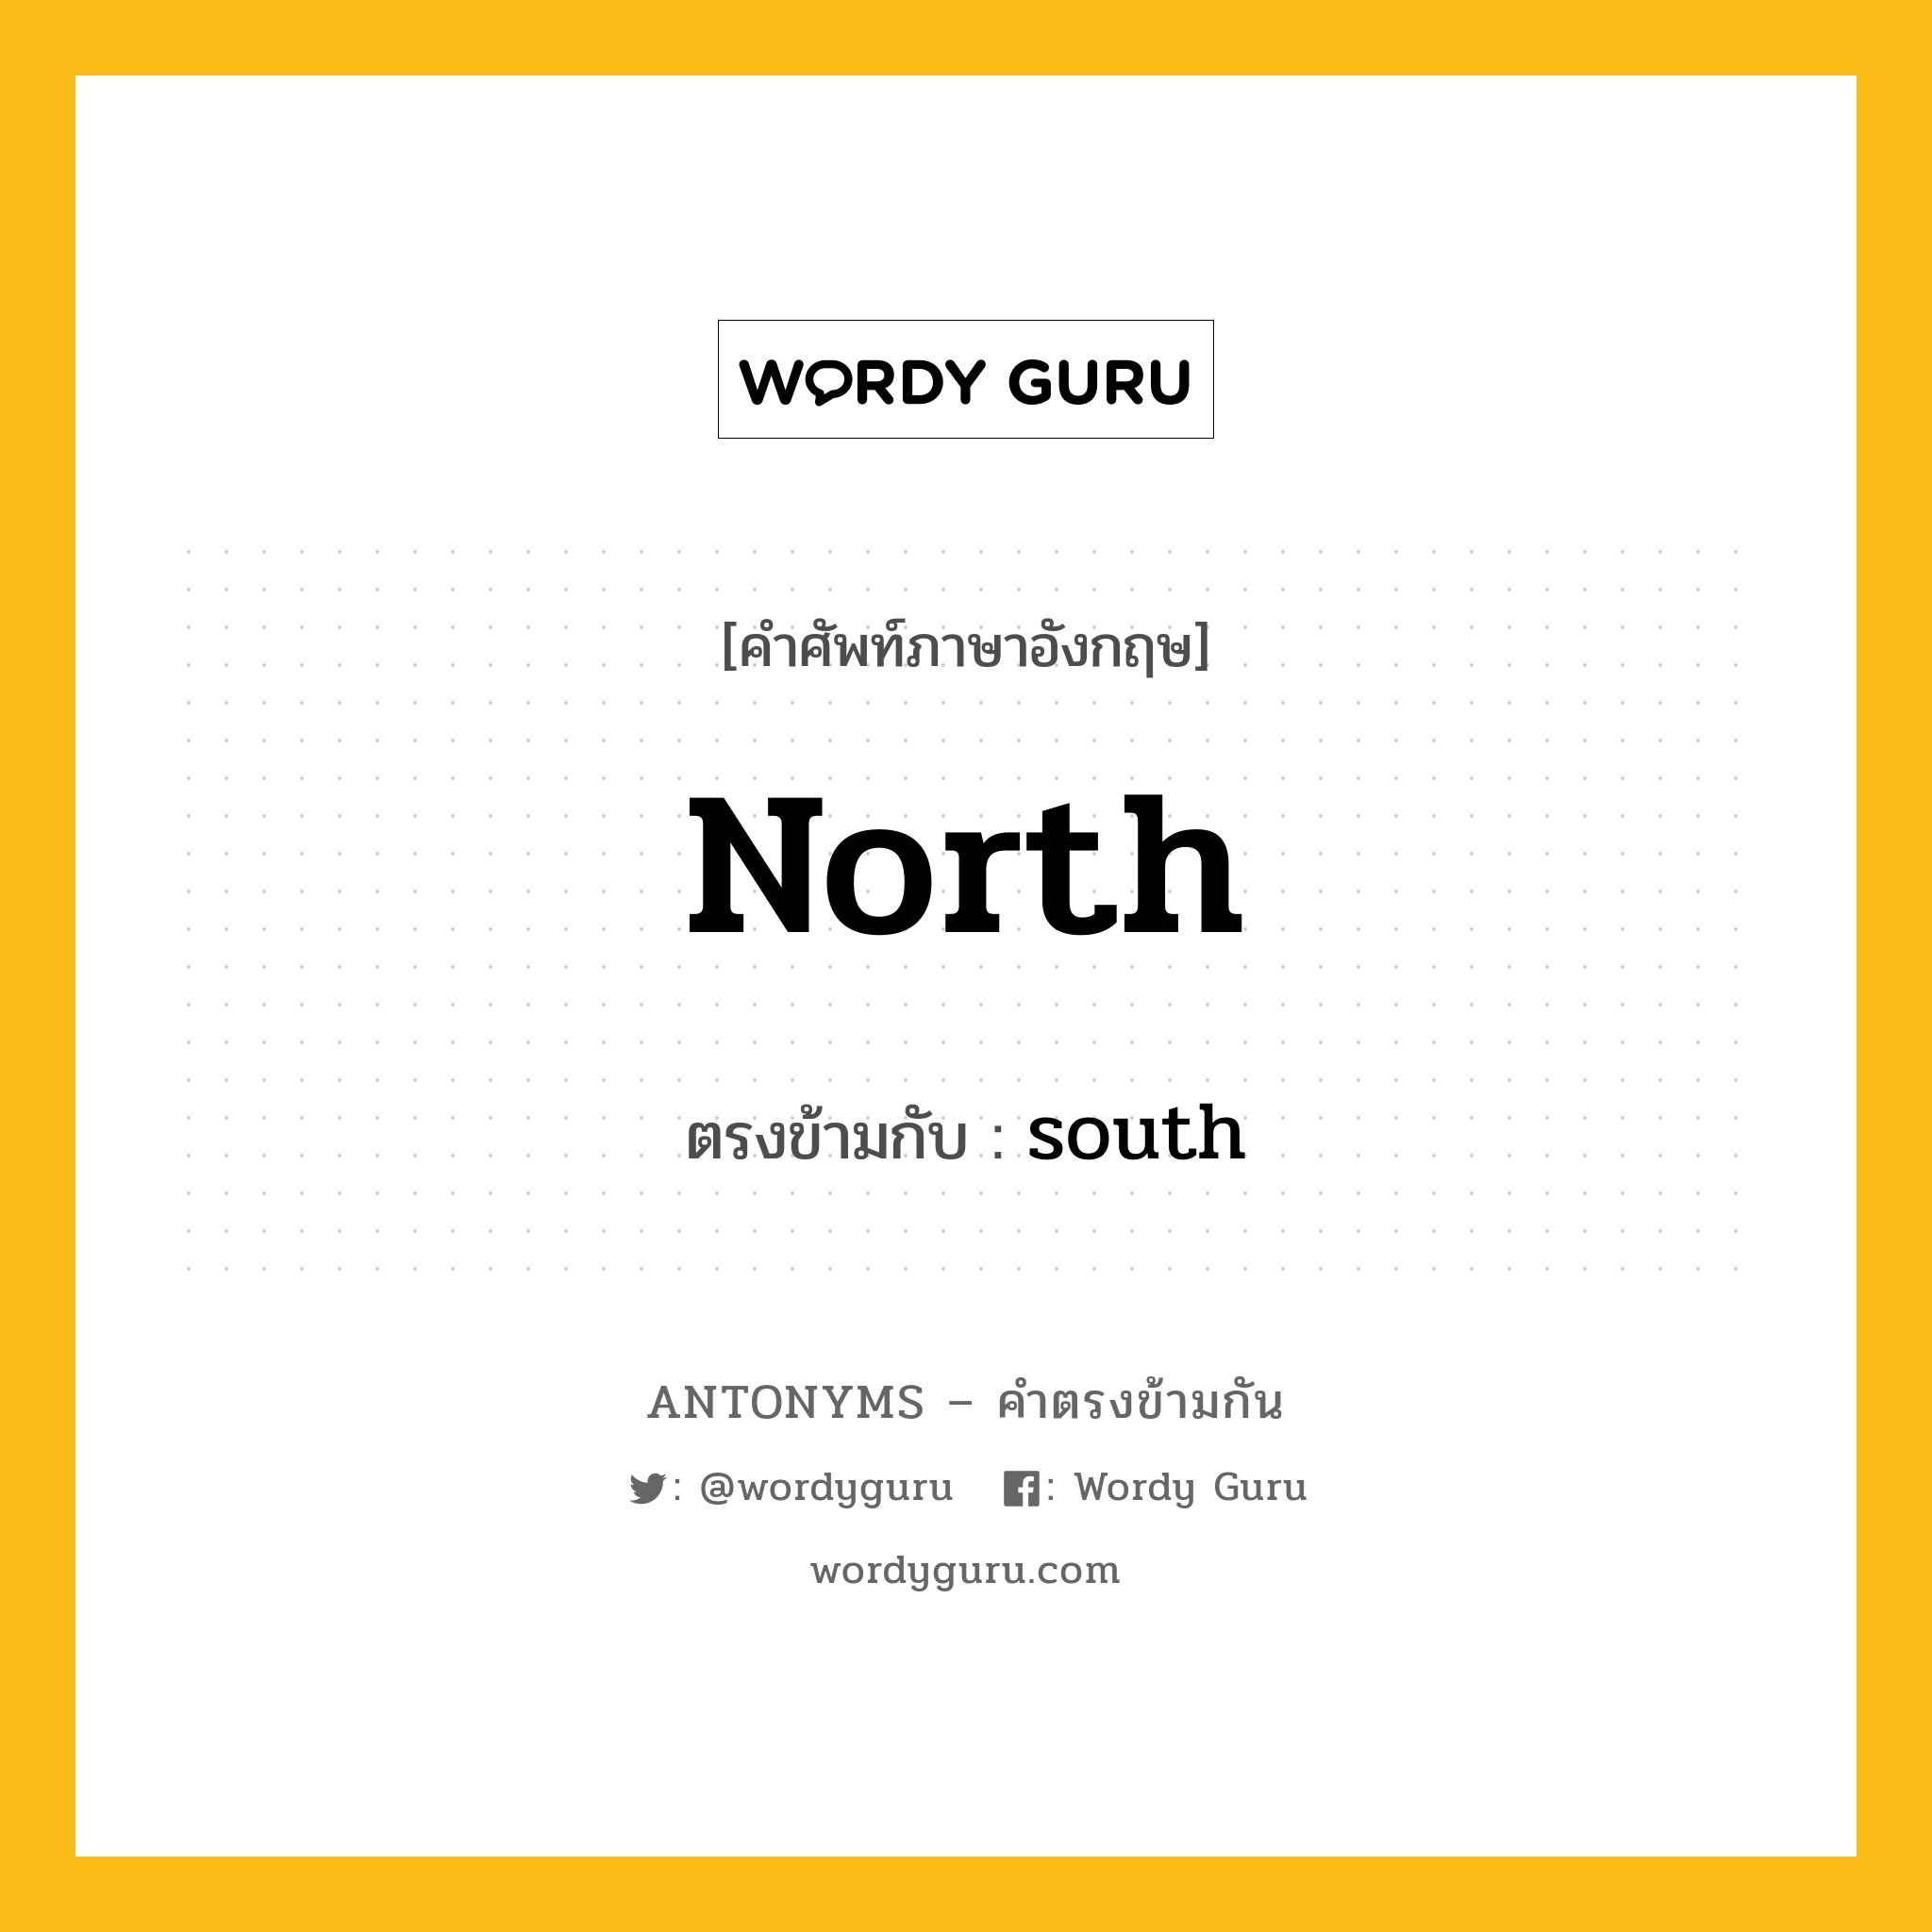 north เป็นคำตรงข้ามกับคำไหนบ้าง?, คำศัพท์ภาษาอังกฤษ north ตรงข้ามกับ south หมวด south